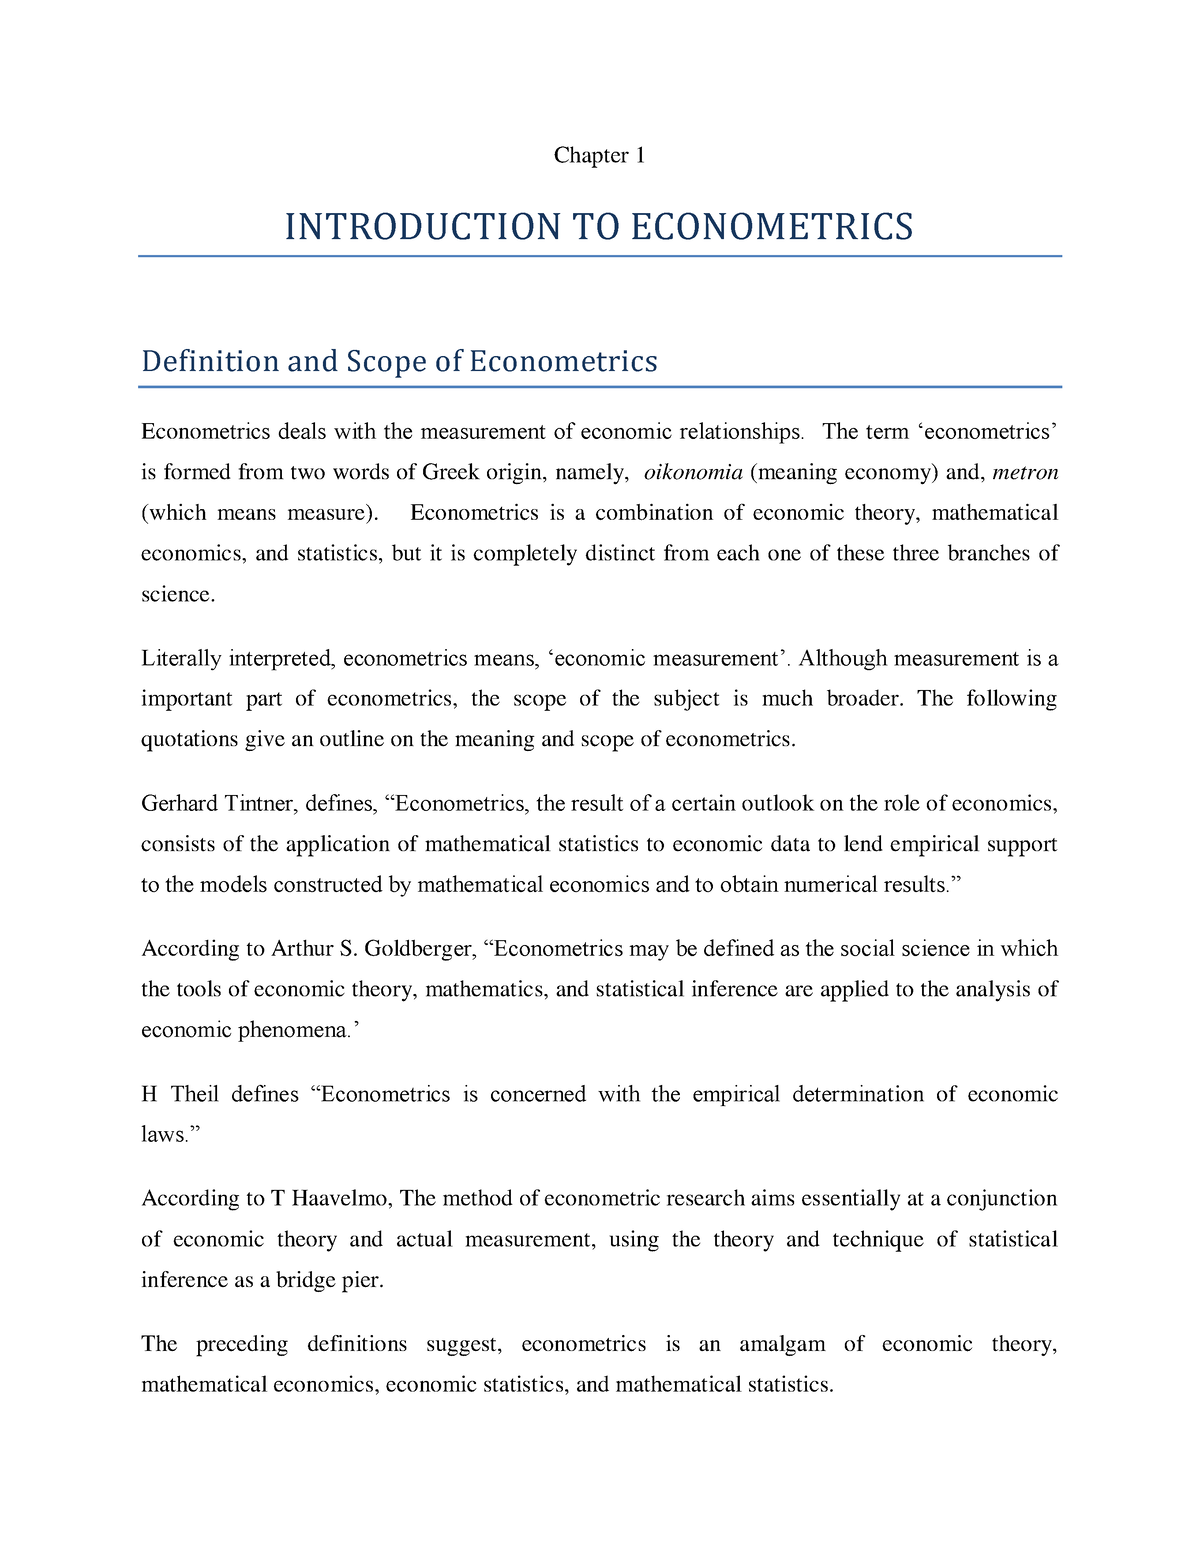 econometrics dissertation help